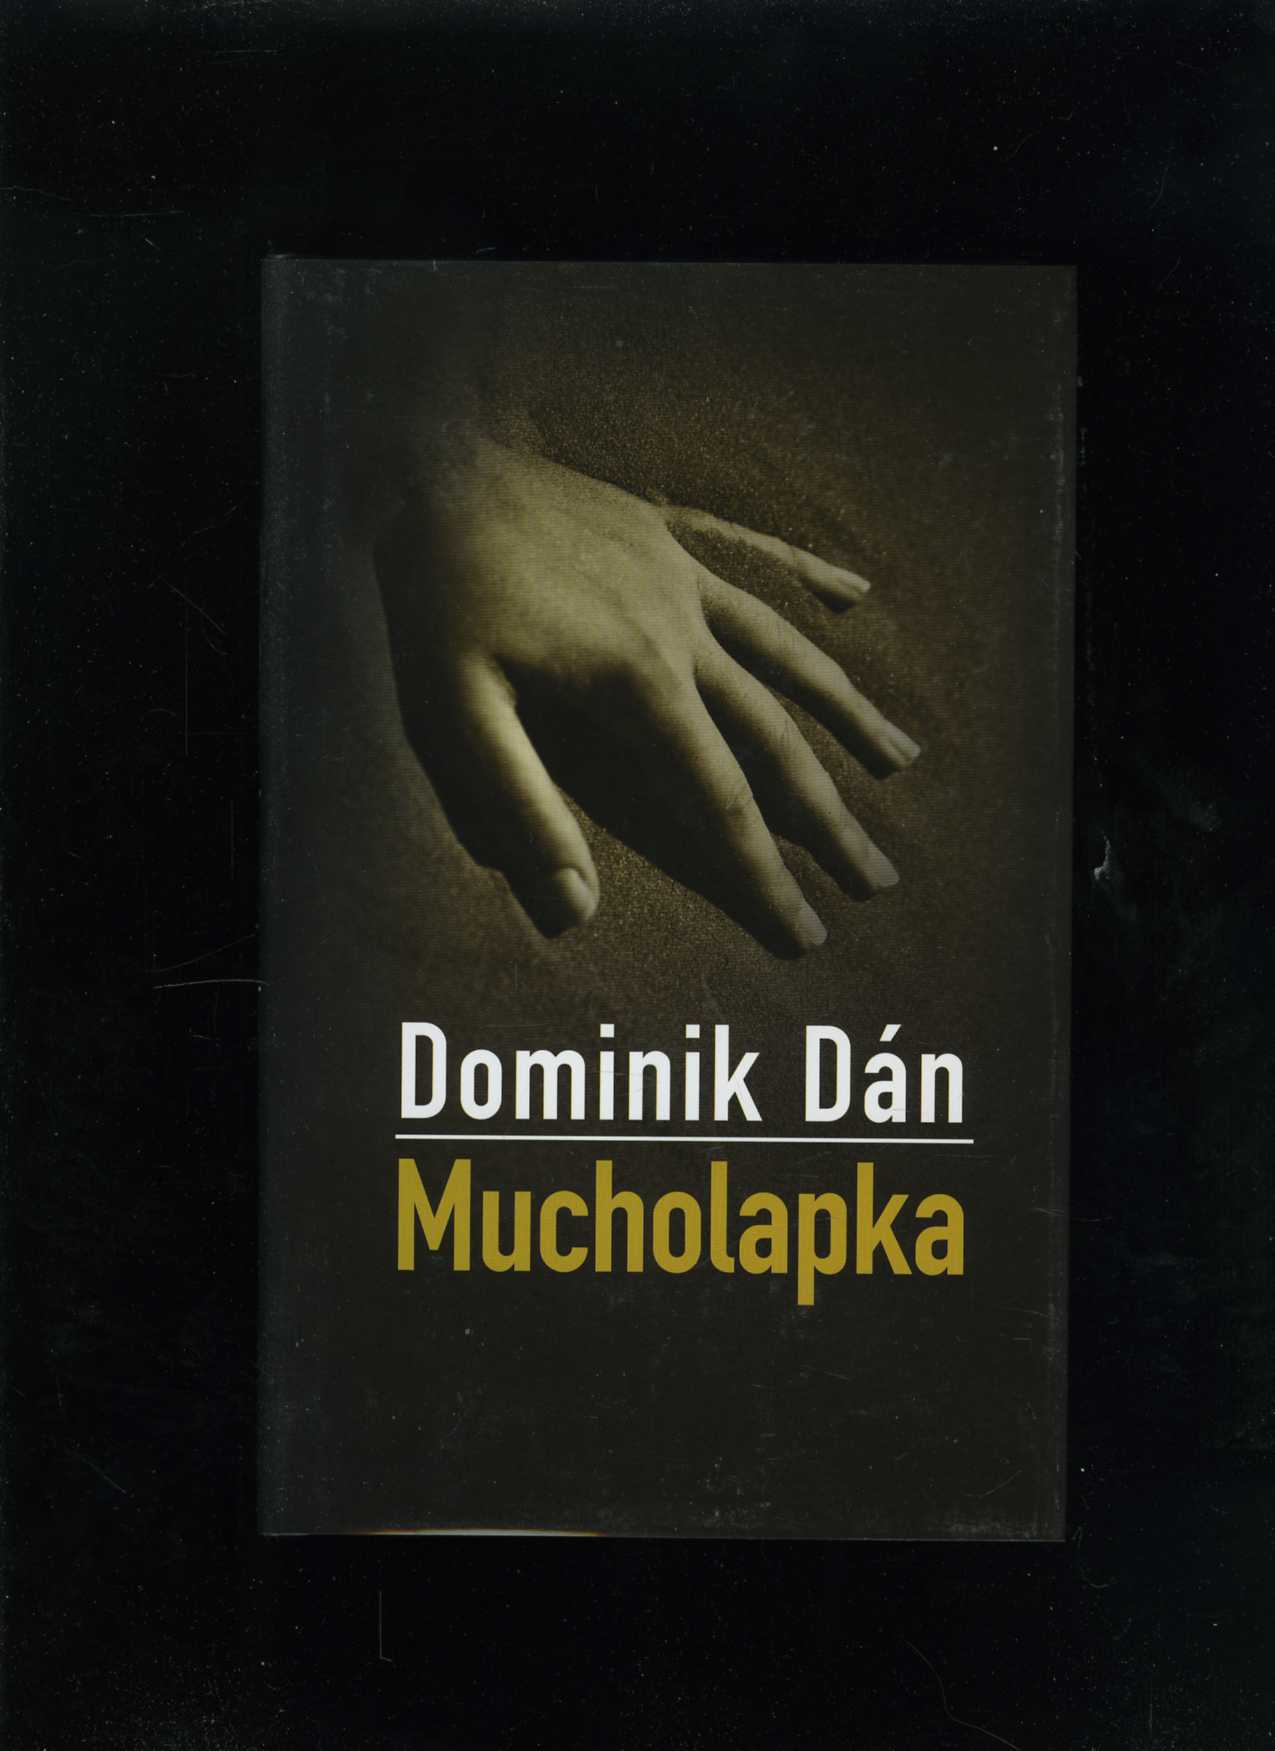 Mucholapka (Dominik Dán)